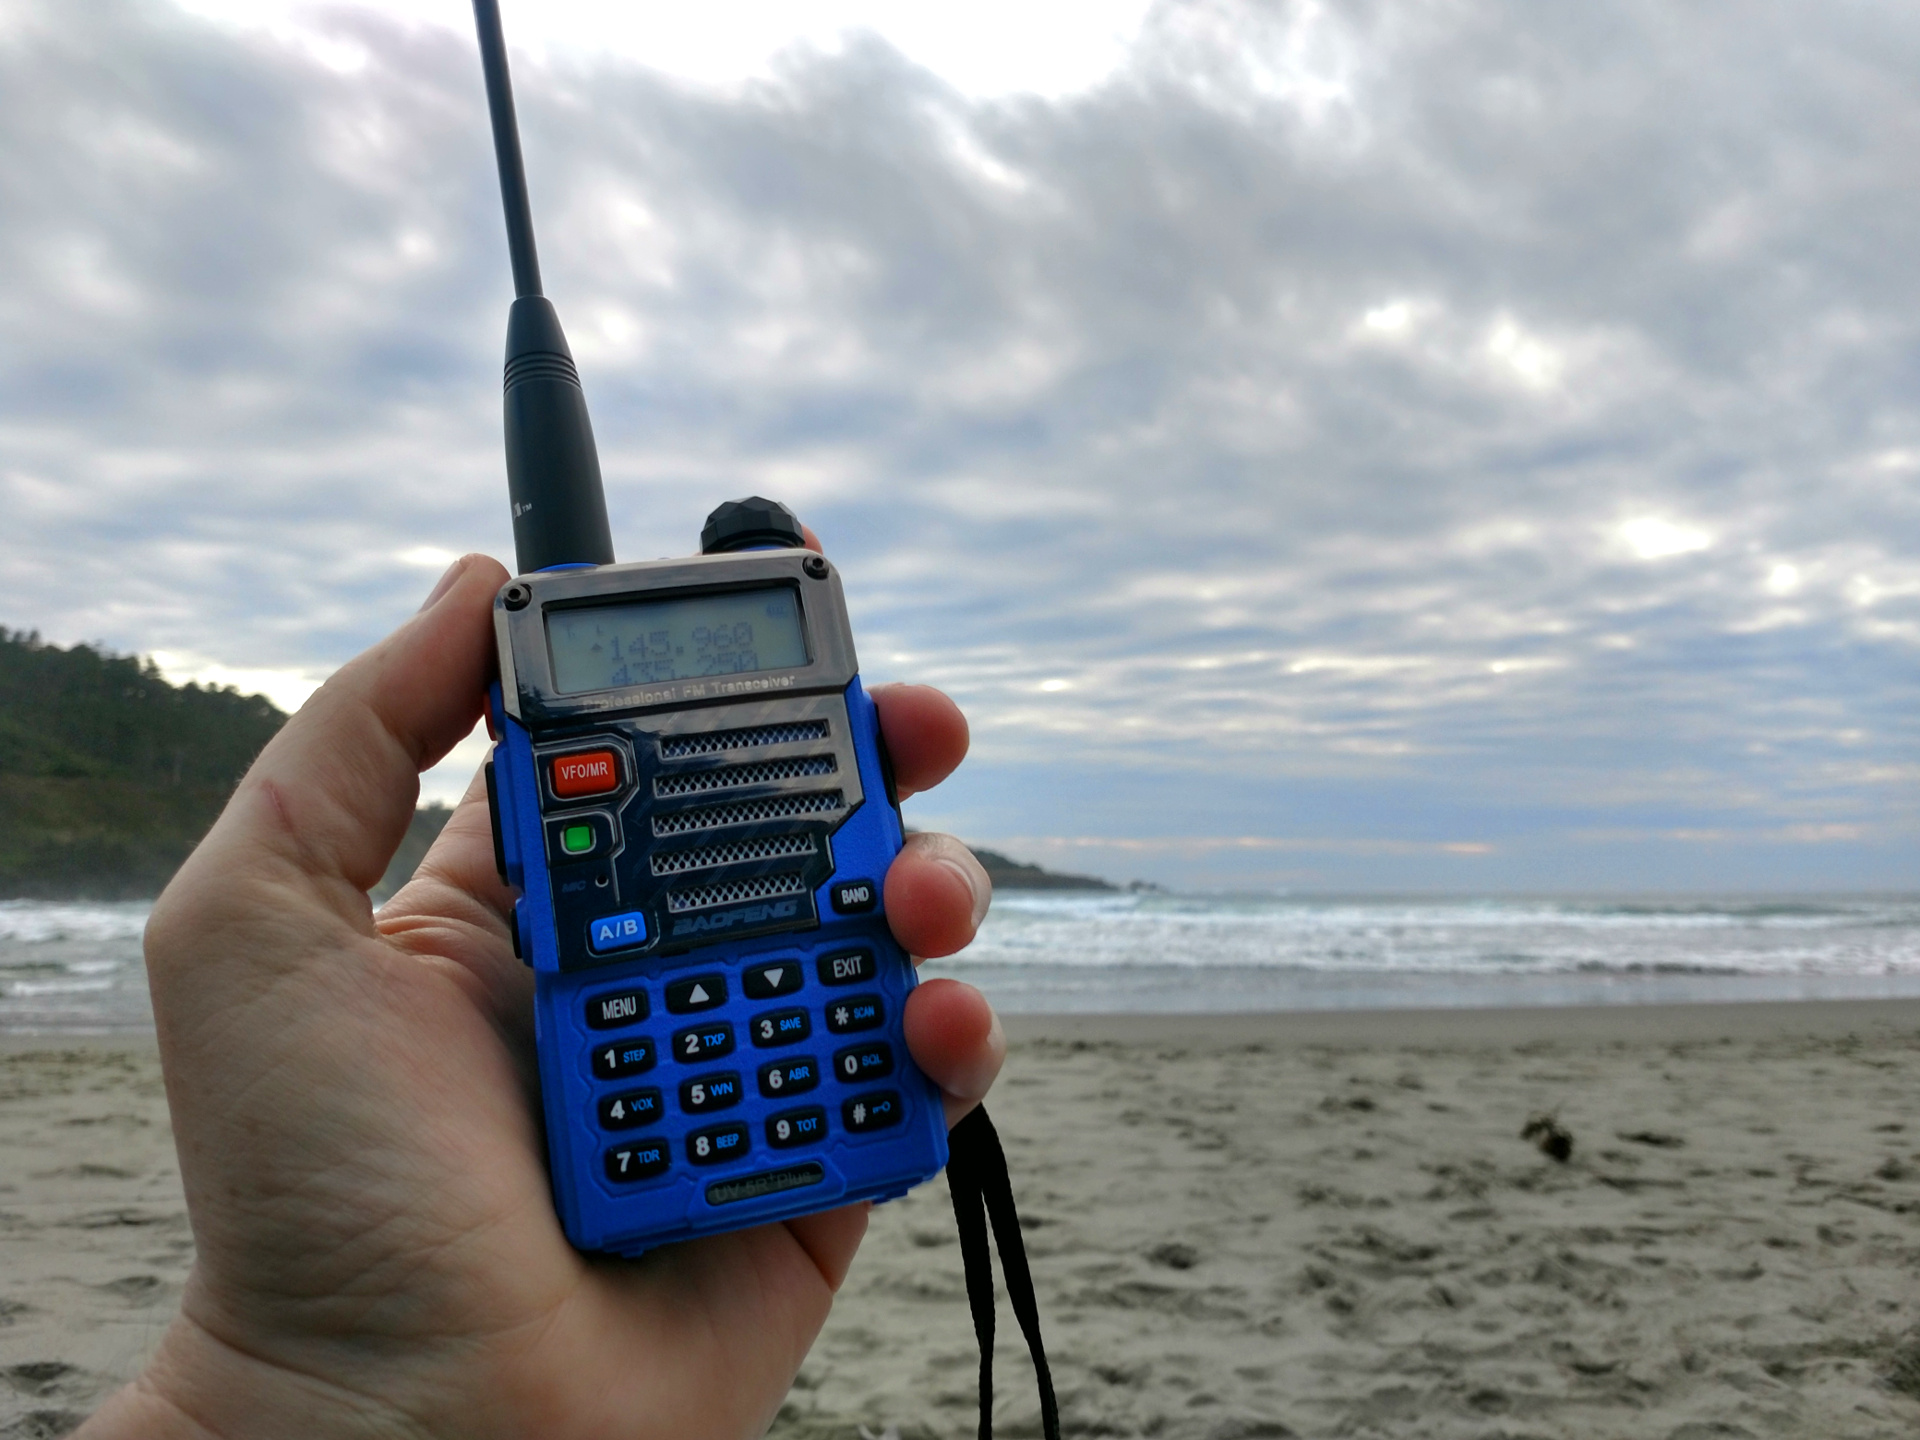 Using a Baofeng Handheld Transceiver to work Amateur Radio Sat